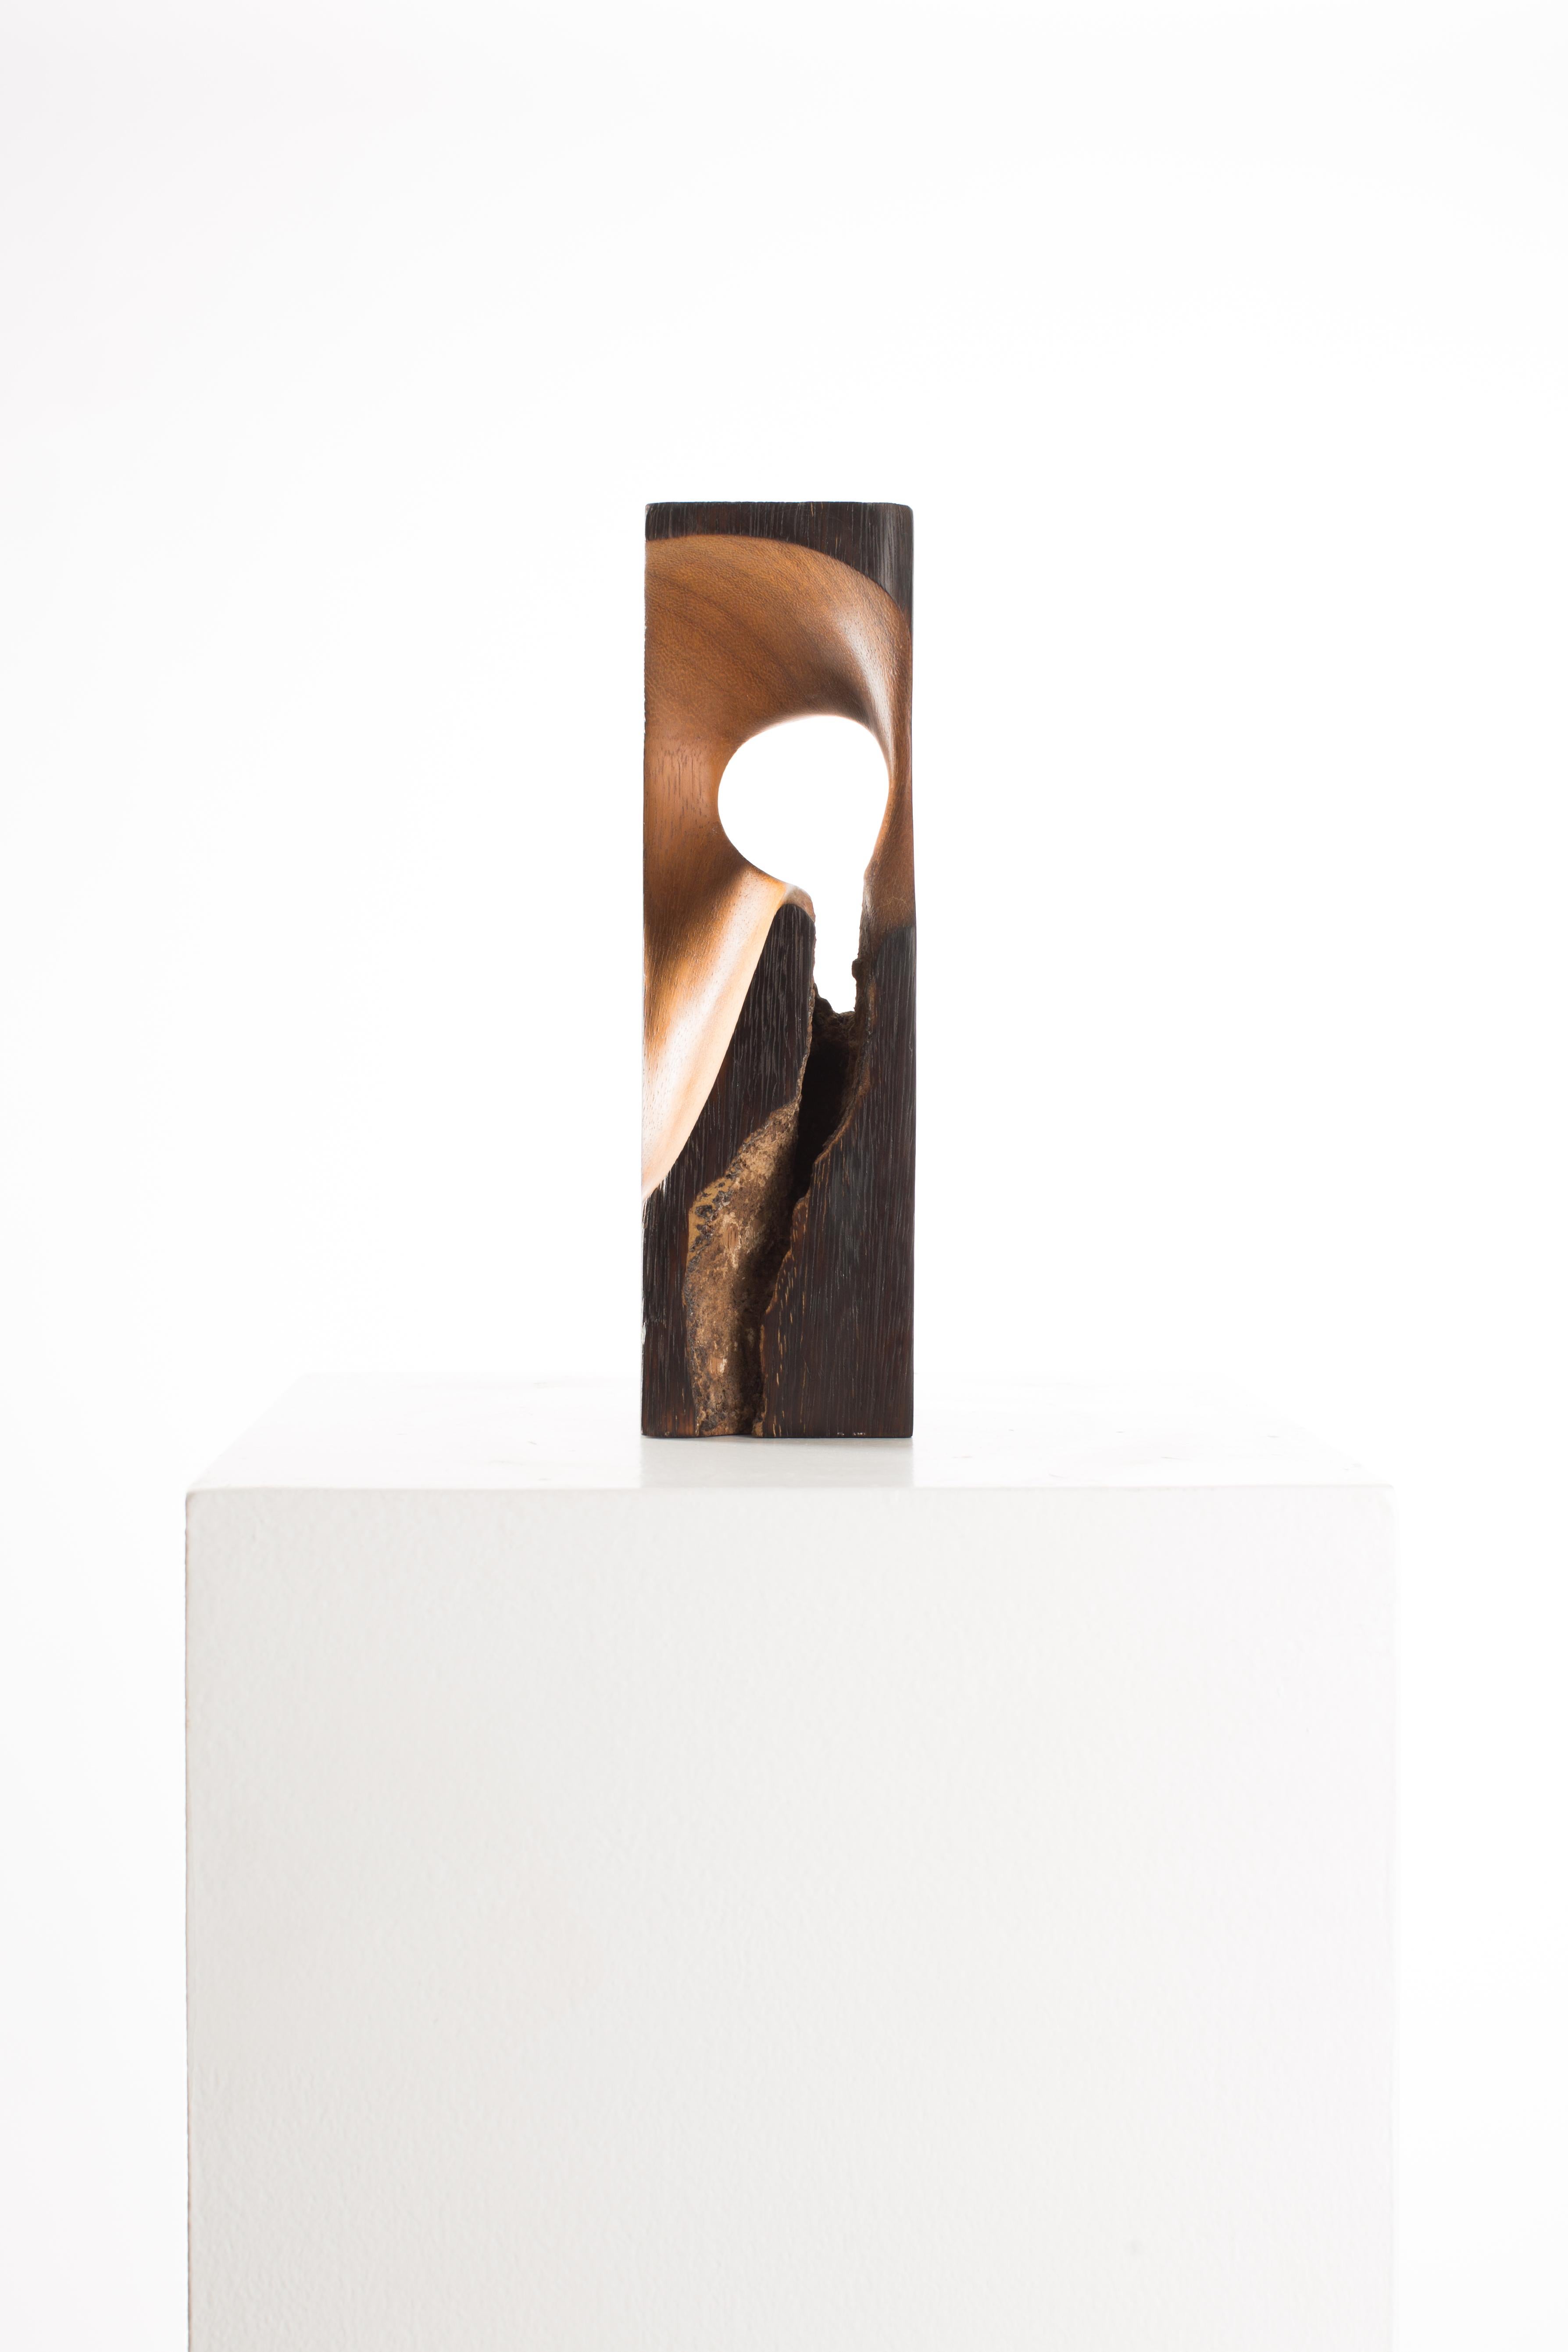 Driaan Claassen Abstract Sculpture - Black, Raw, Satin, Wood, Abstract, Contemporary, Modern, Sculpture